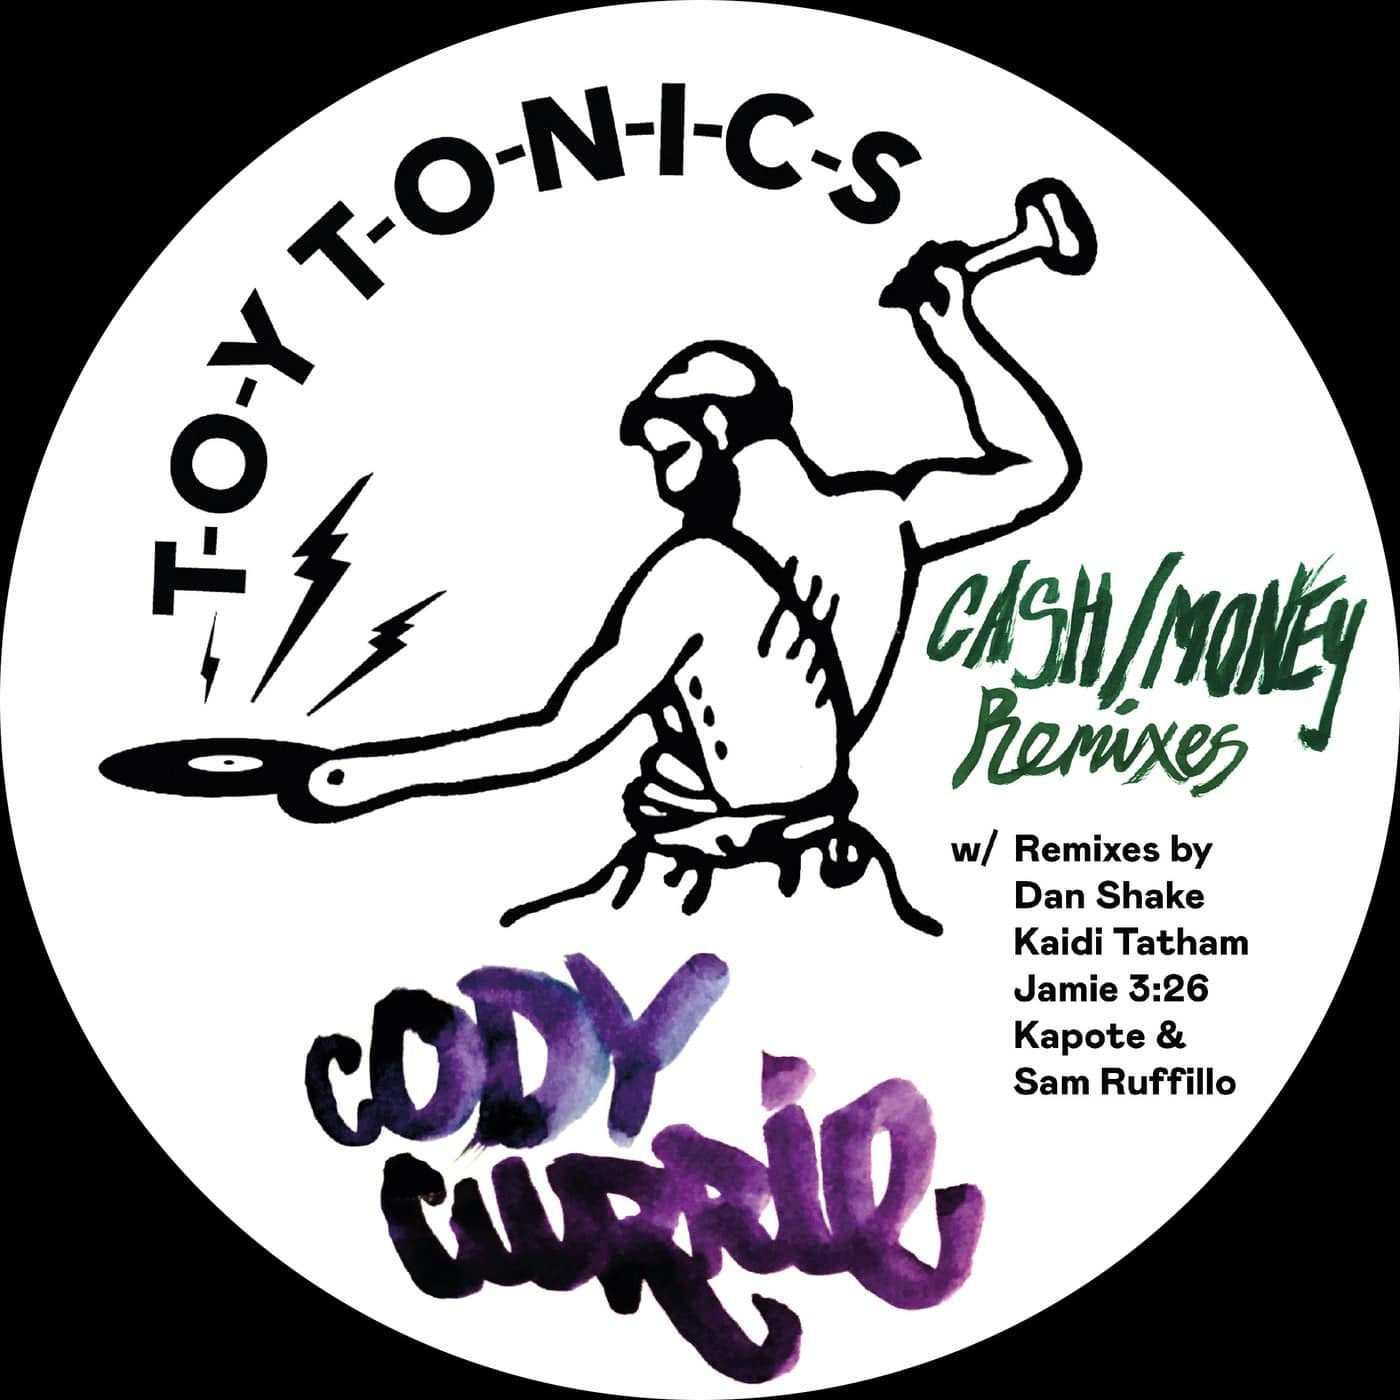 Download Dan Shake, Cody Currie, Kapote, Sam Ruffillo, Kaidi Tatham, Jamie 3:26 - Cash / Money Remixes on Electrobuzz